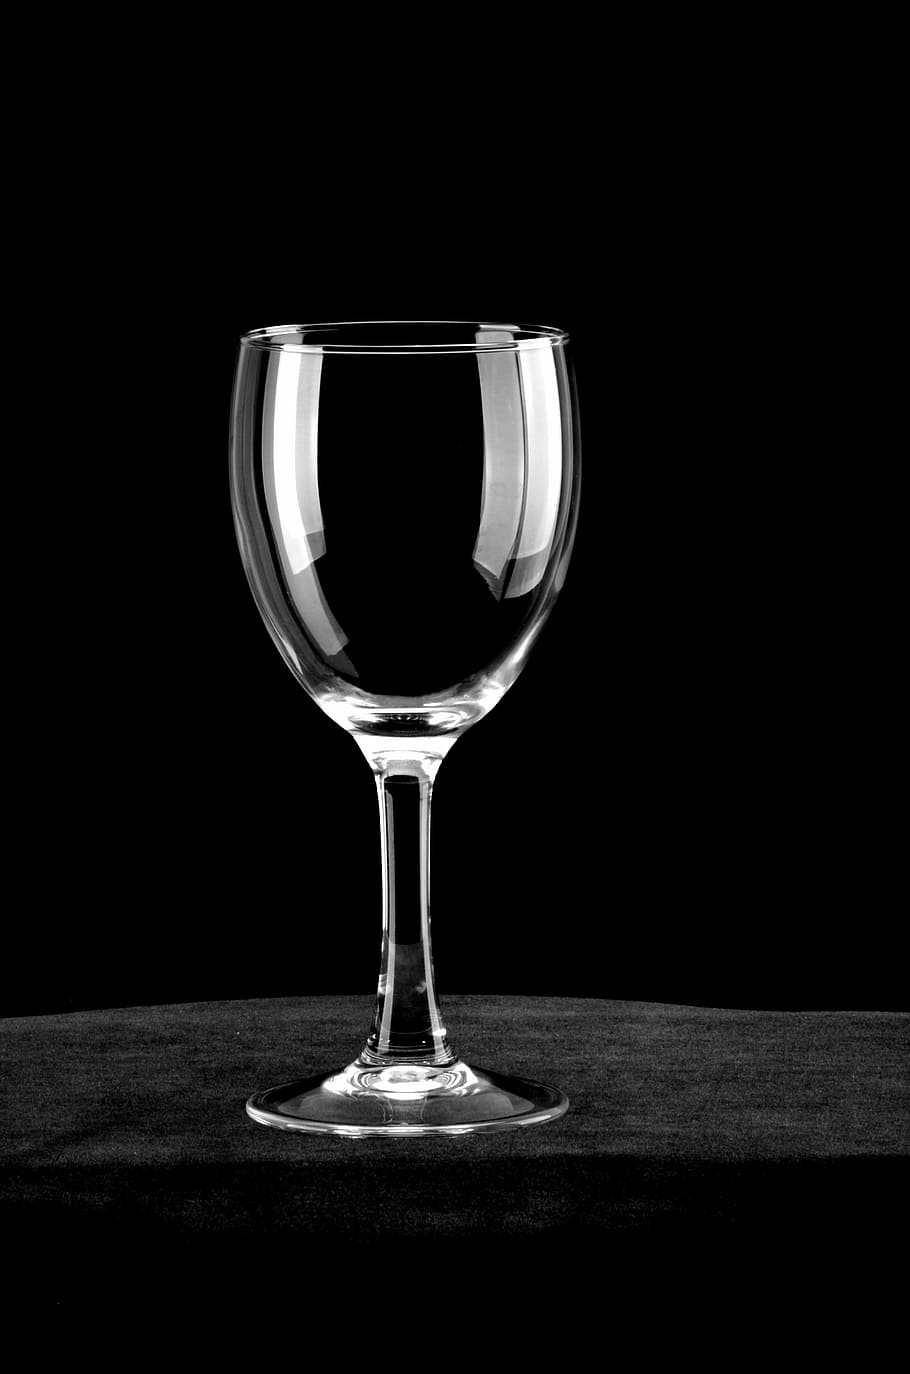 gelas anggur di atas meja, kaca, garis-garis putih, piala, gelas anggur merah, gelas anggur, gelas minum, latar belakang hitam, alkohol, warna hitam